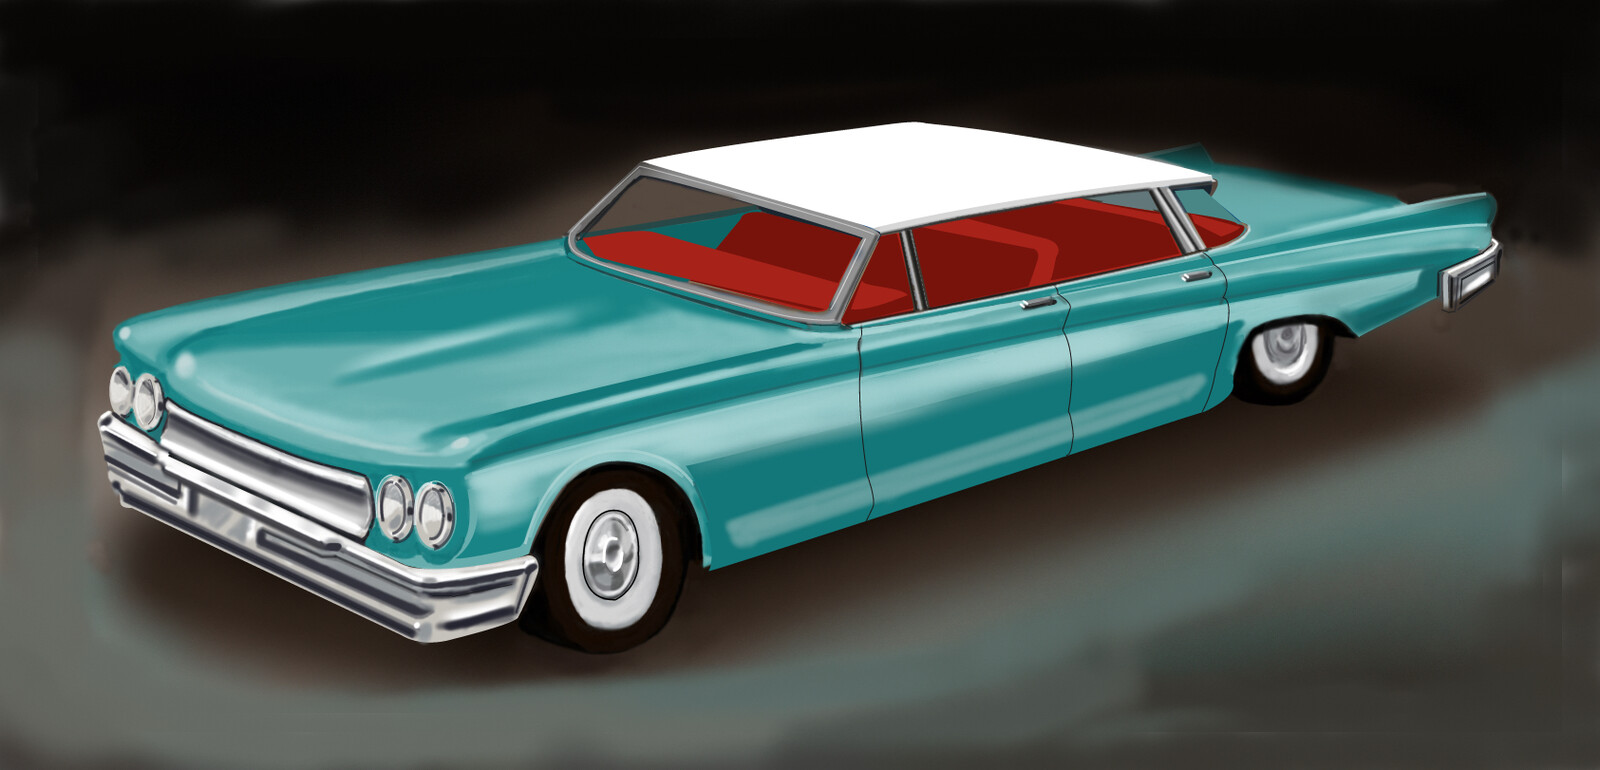 Digital drawing of a toy car.